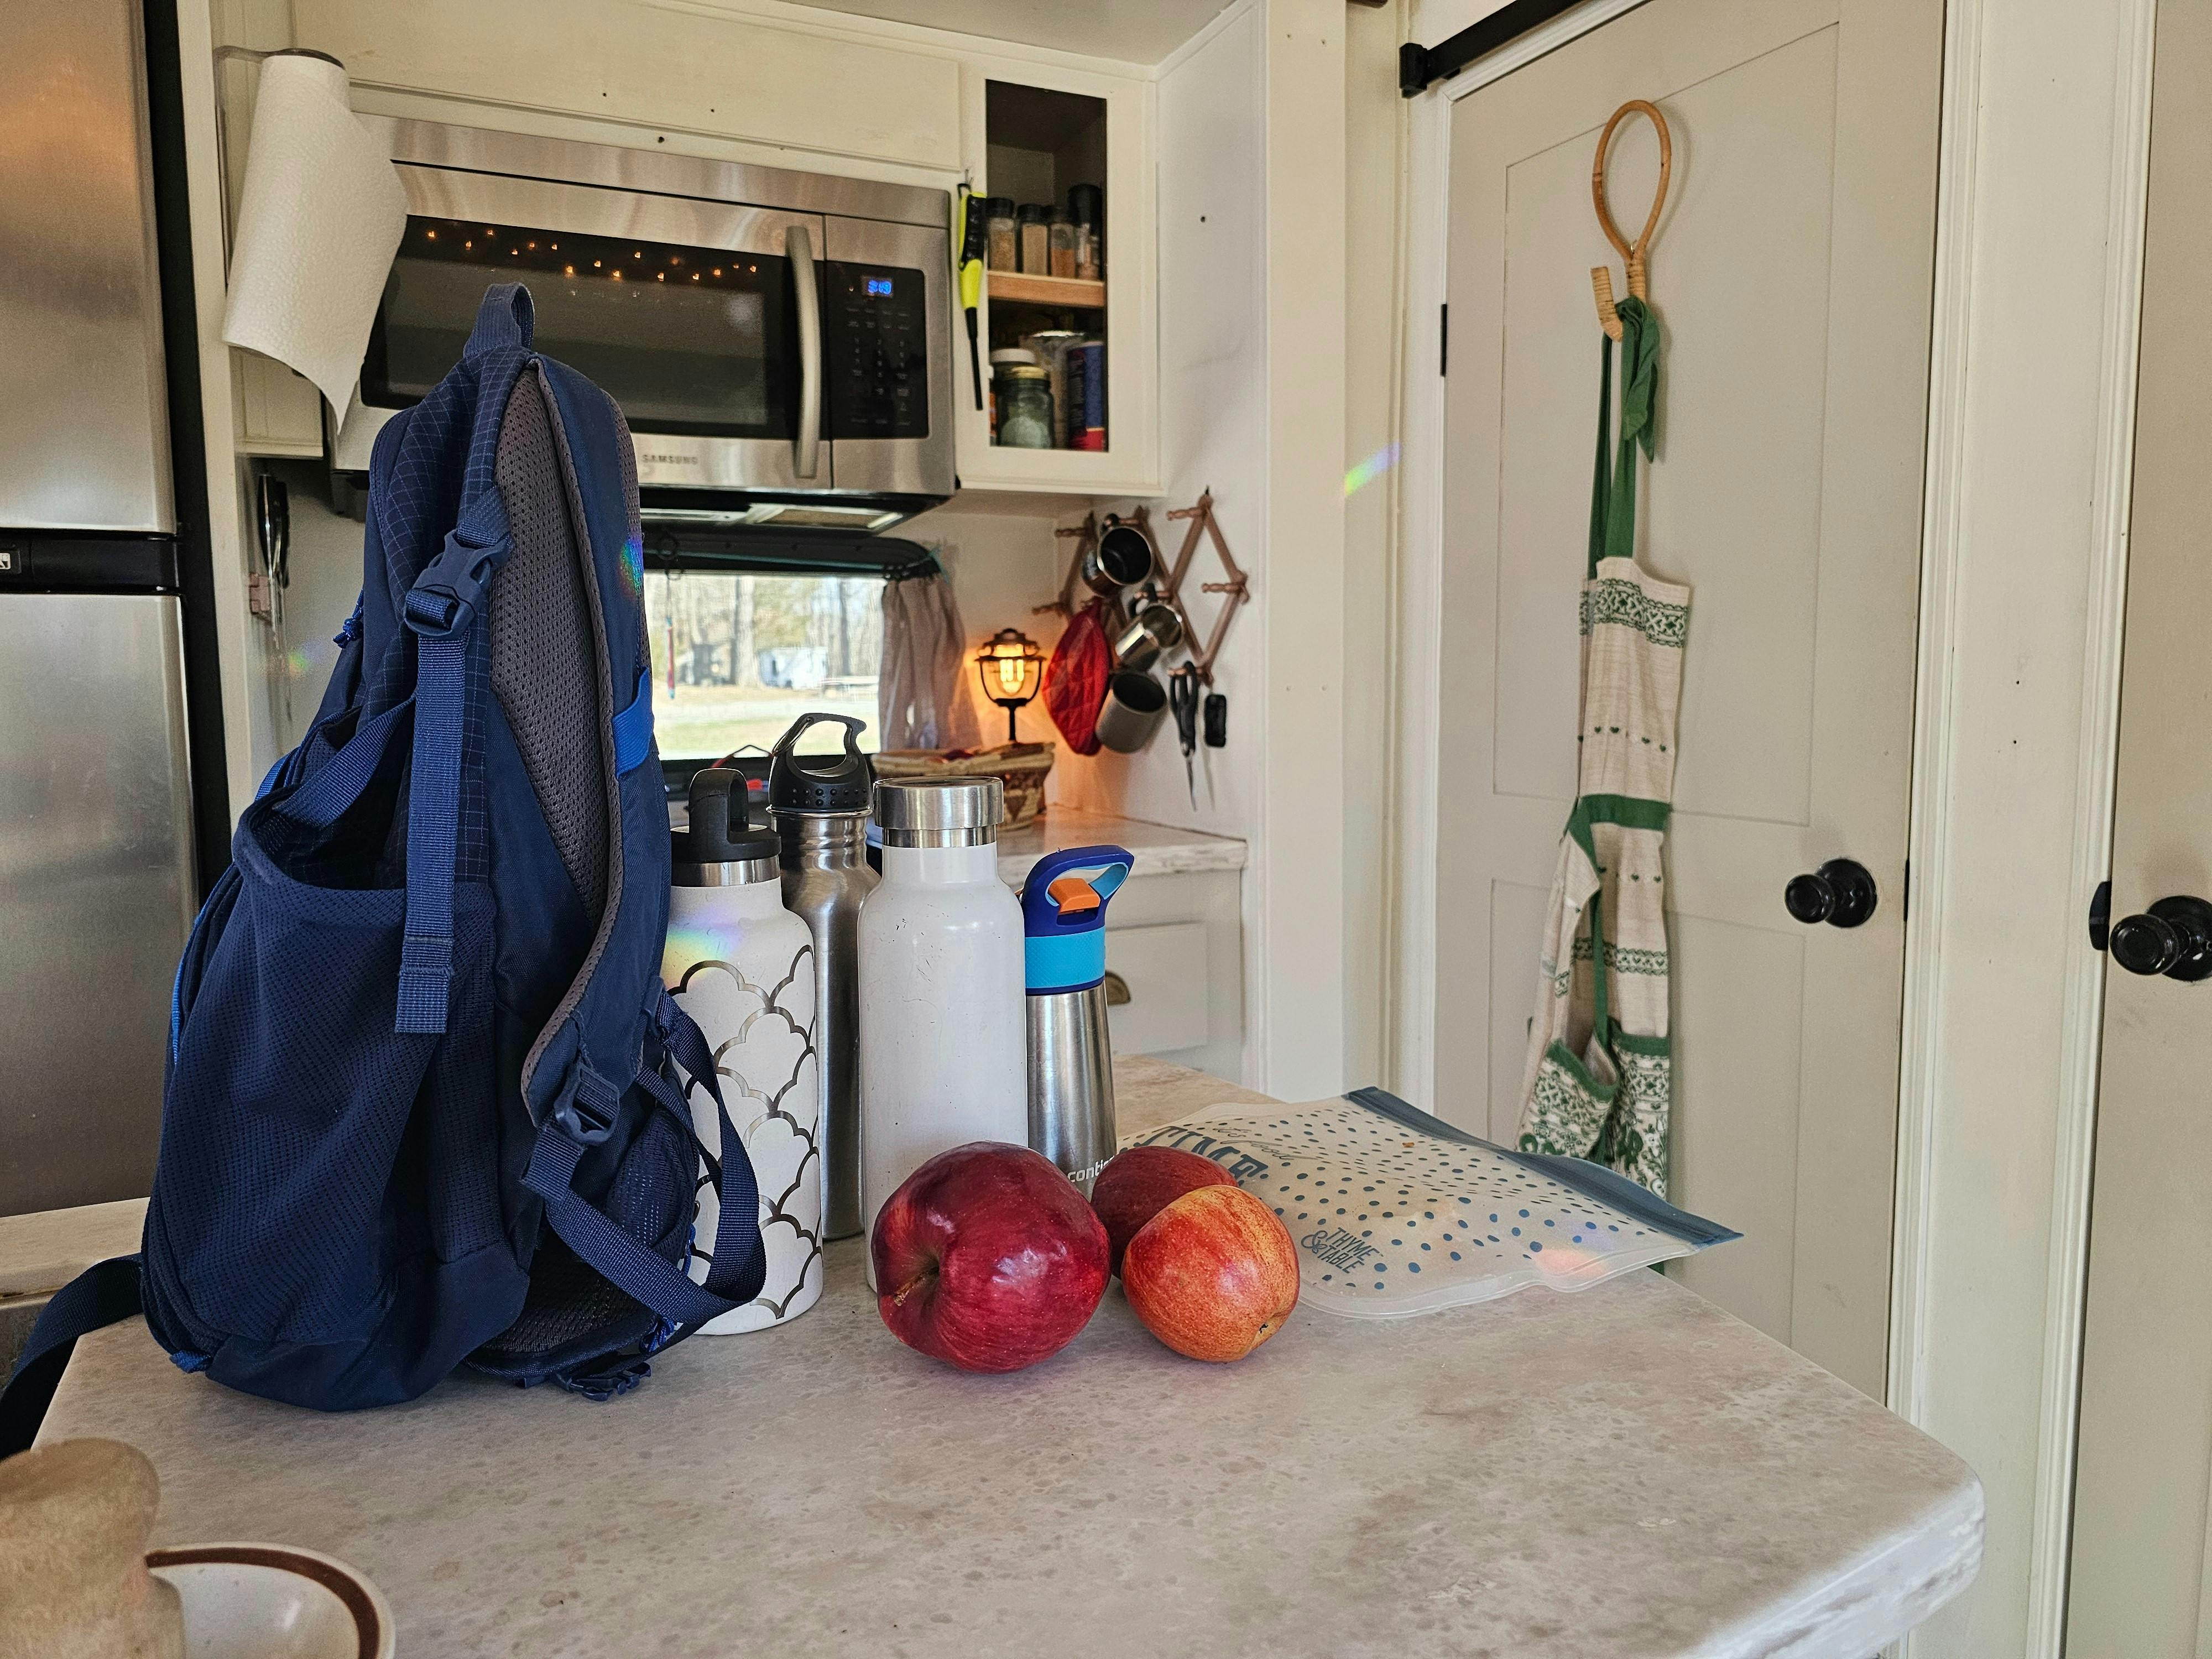 An emergency bag sitting on the kitchen countertop of JC and Bibi Barringer's KZ Durango fifth wheel.